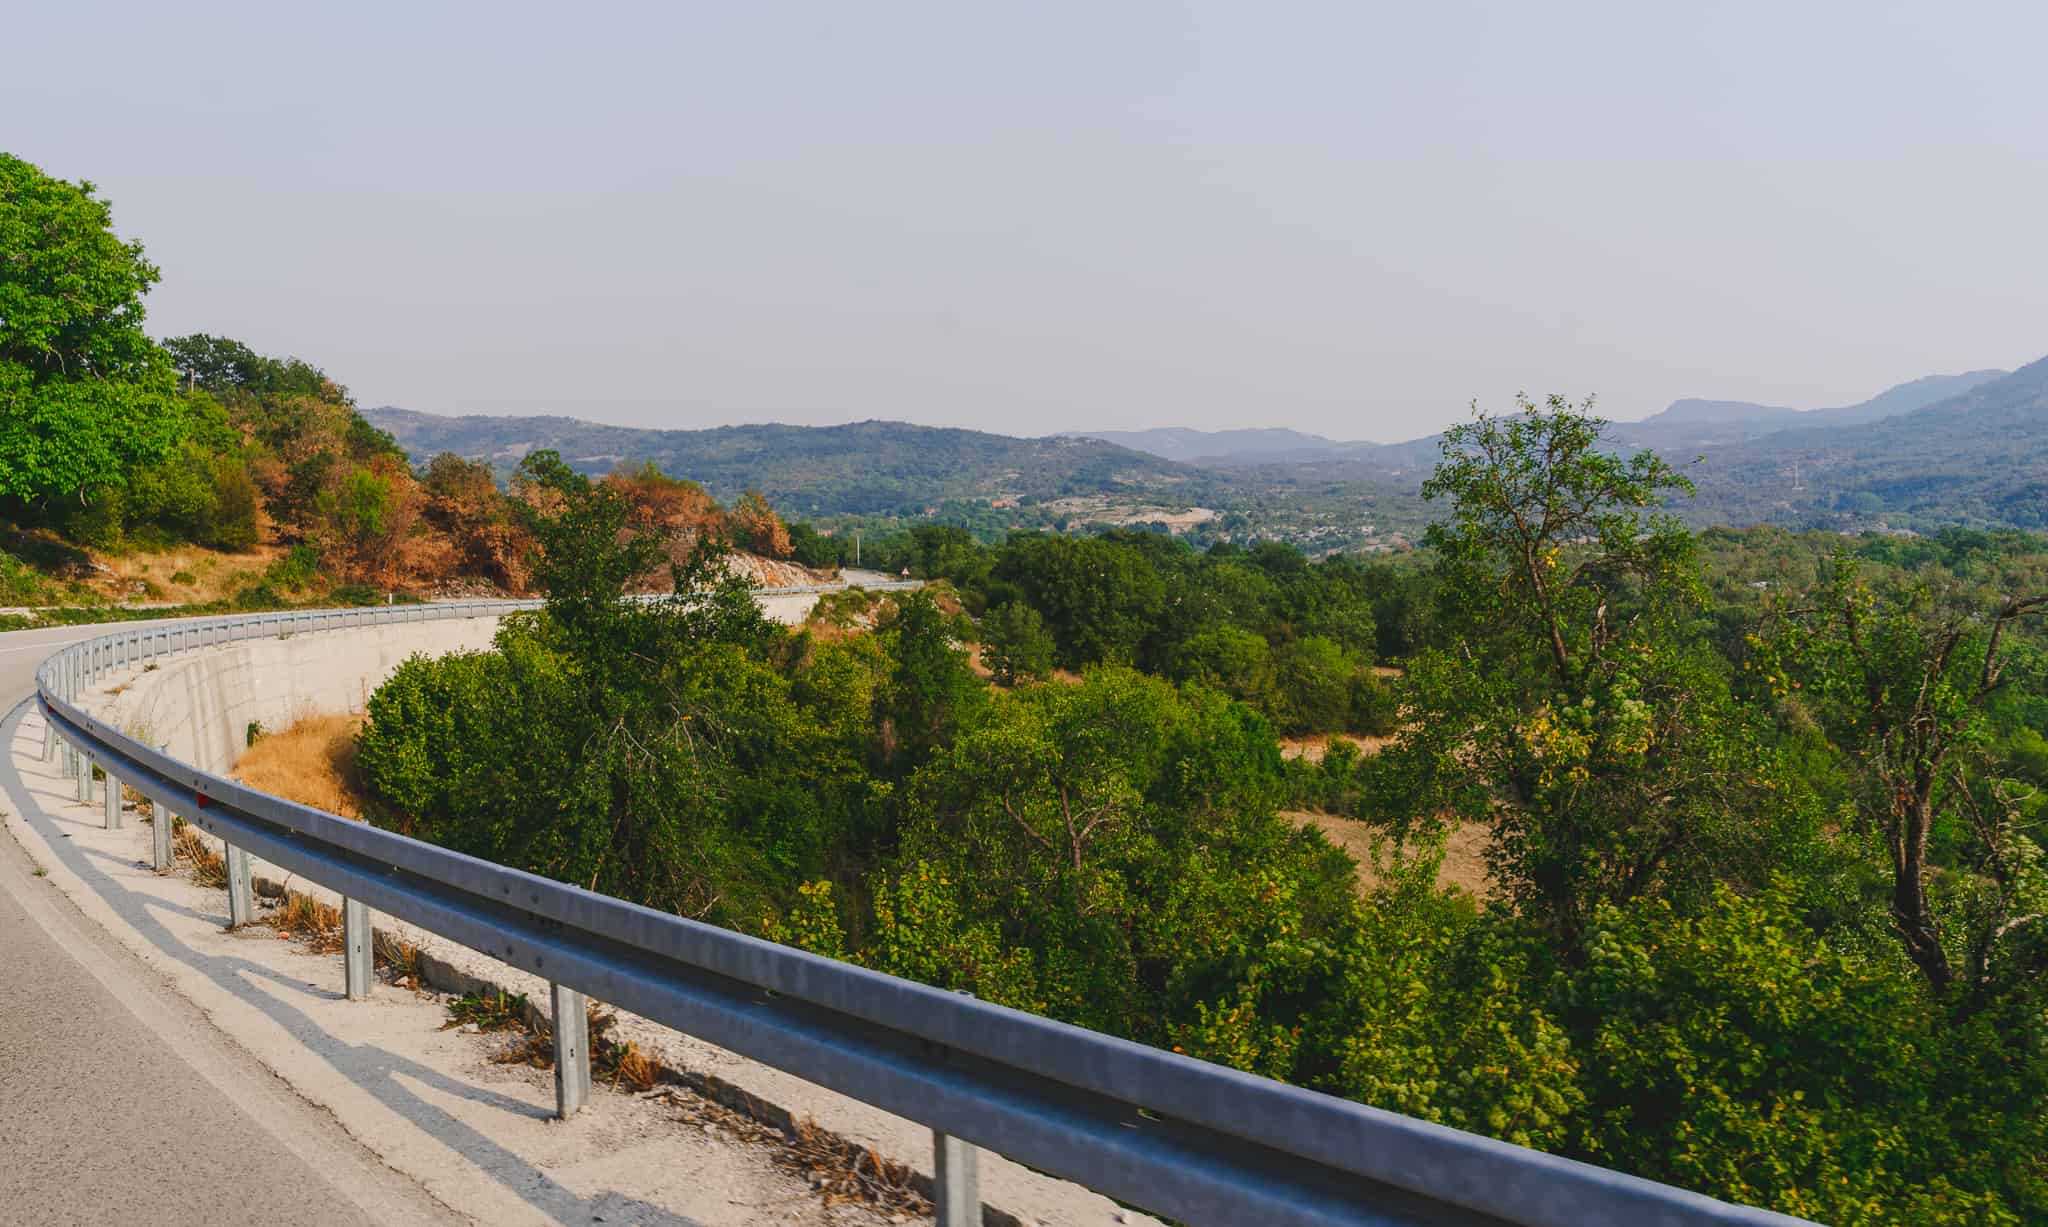 Driving through the winding roads of Montenegro hillside